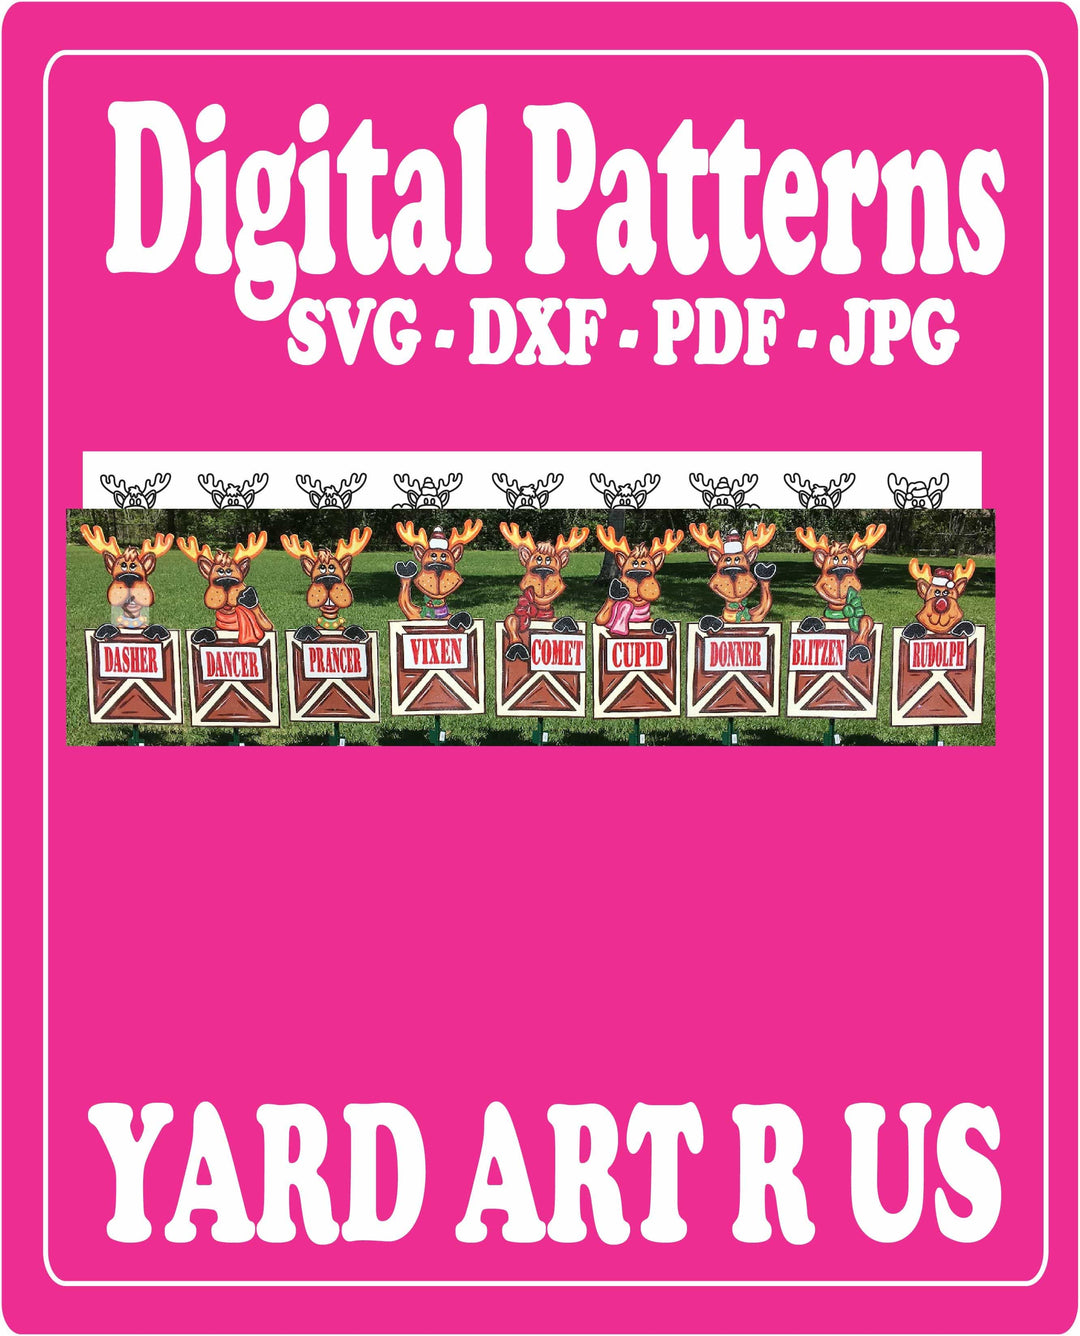 Christmas Reindeer 9PC Set with Names on Barn Door Yard Art - SVG - DXF - PDF - JPG Files